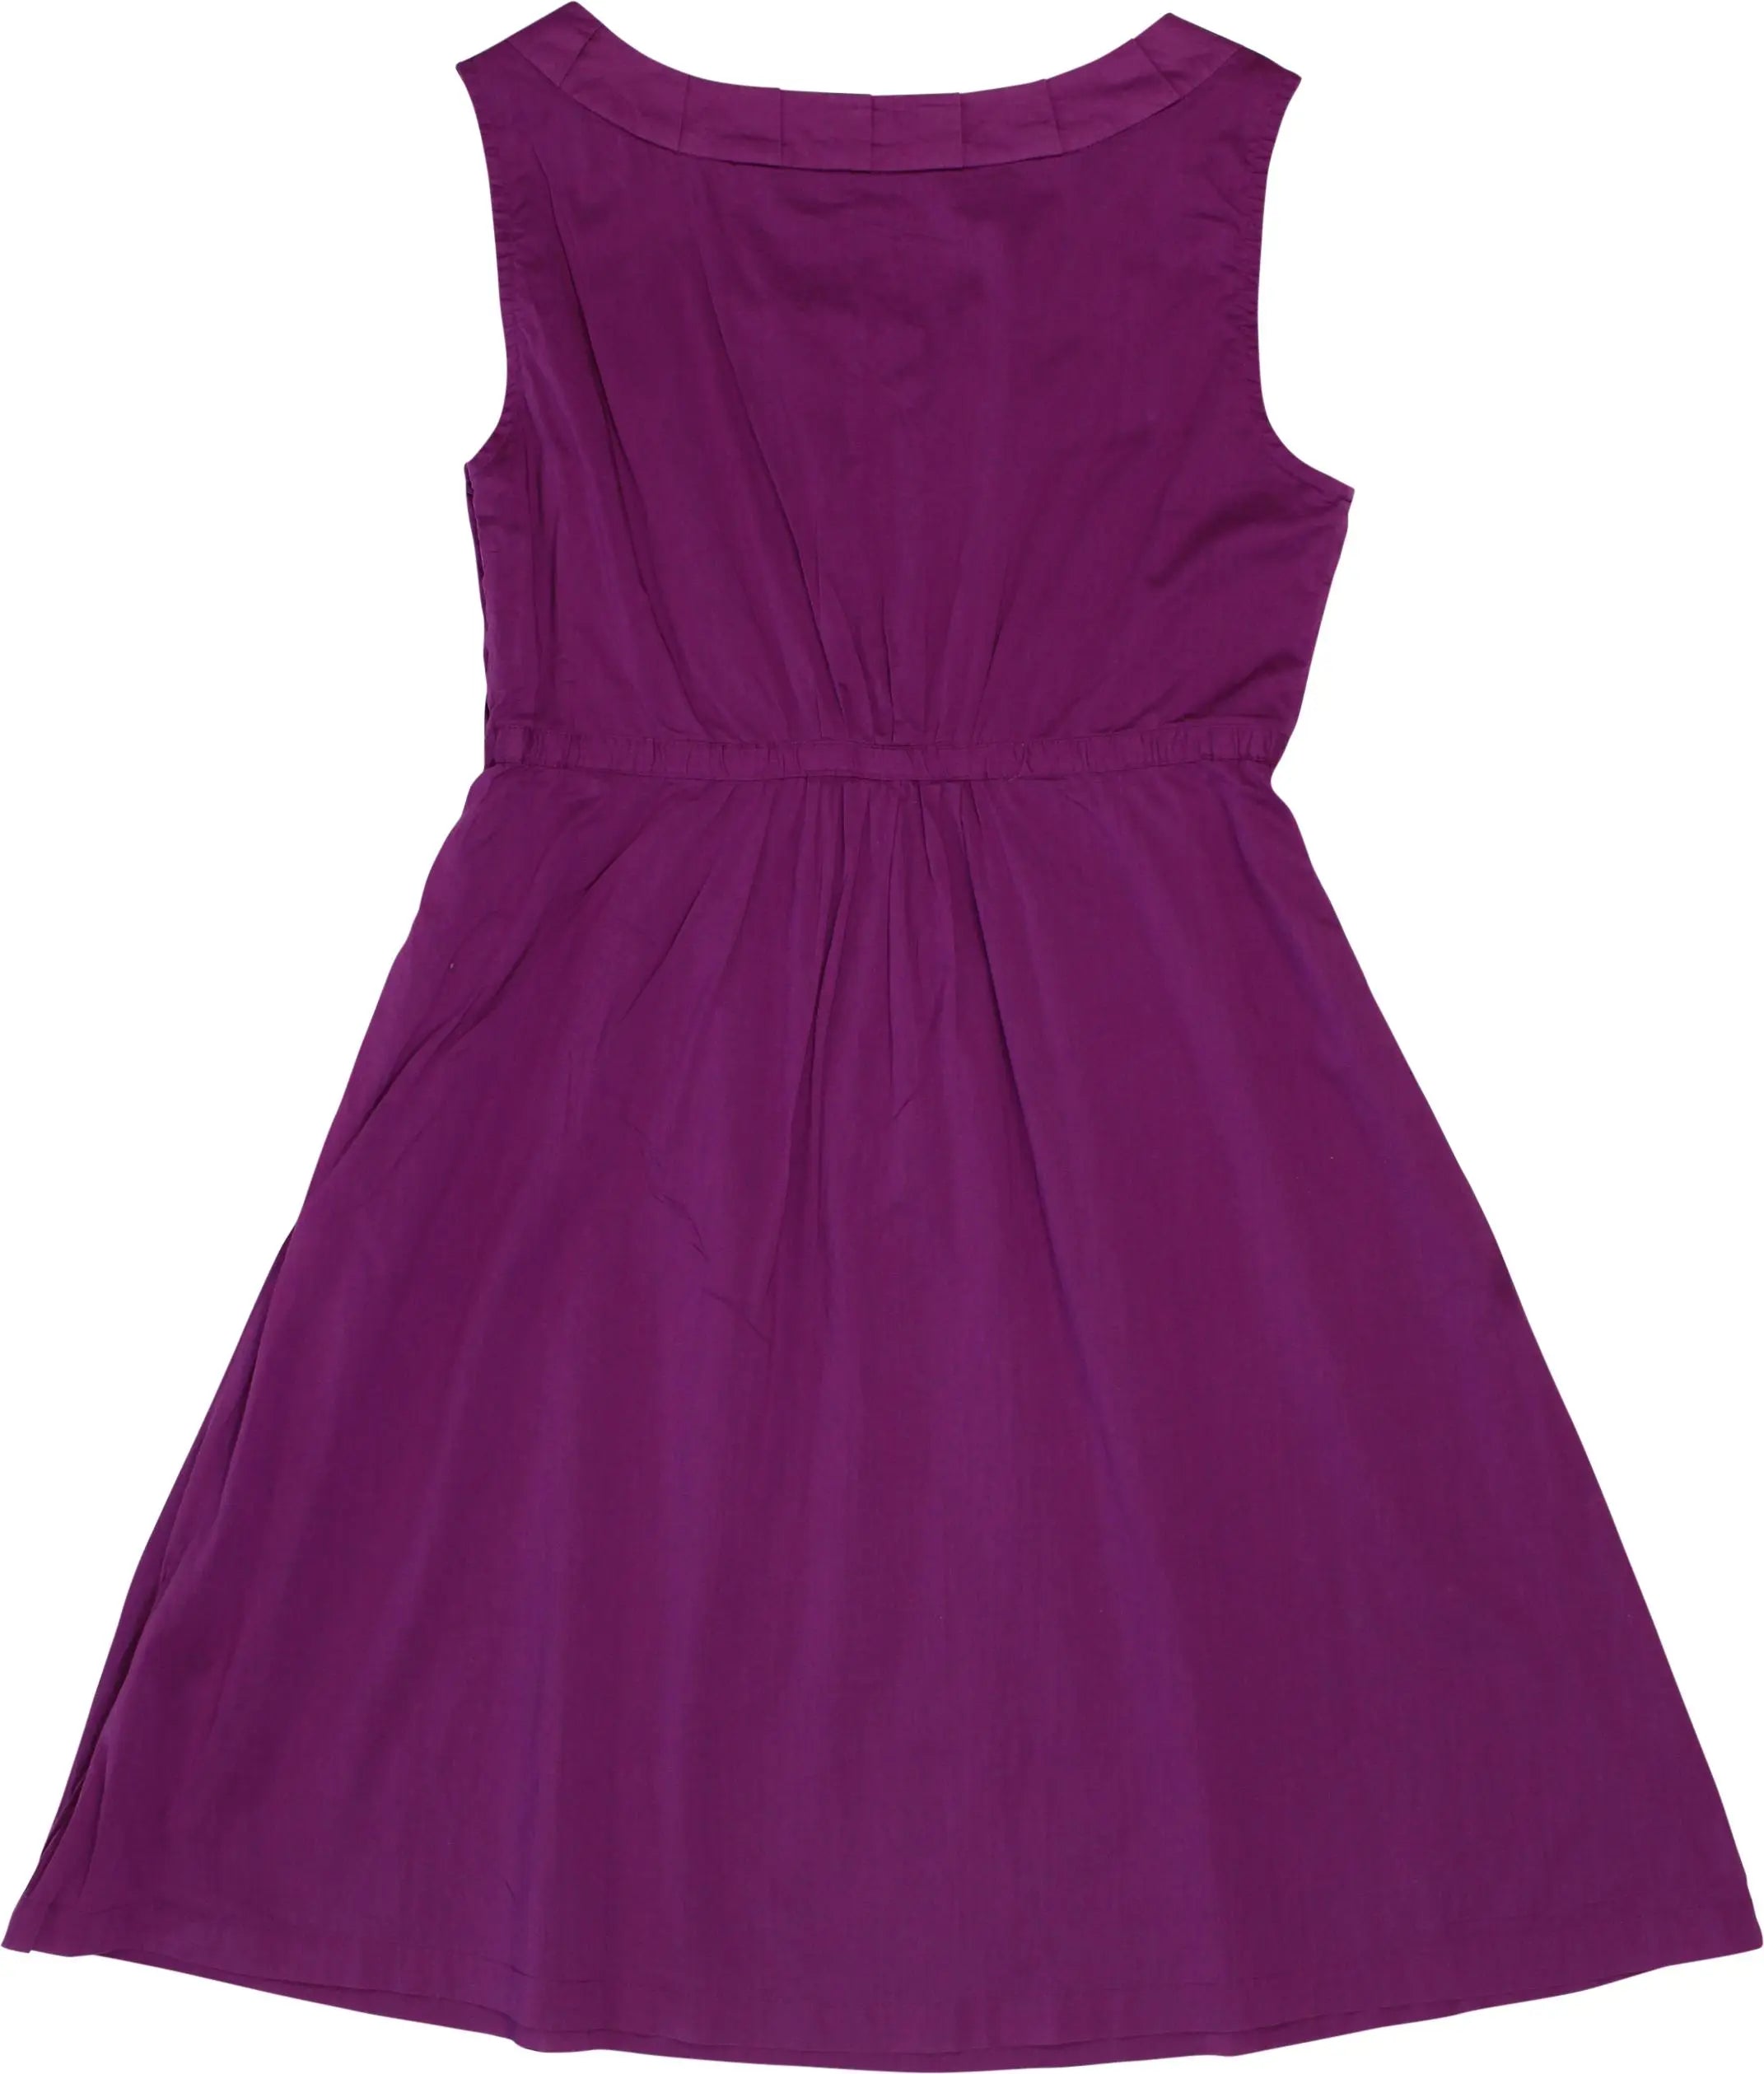 Tommy Hilfiger - Tommy Hilfiger Purple Dress- ThriftTale.com - Vintage and second handclothing